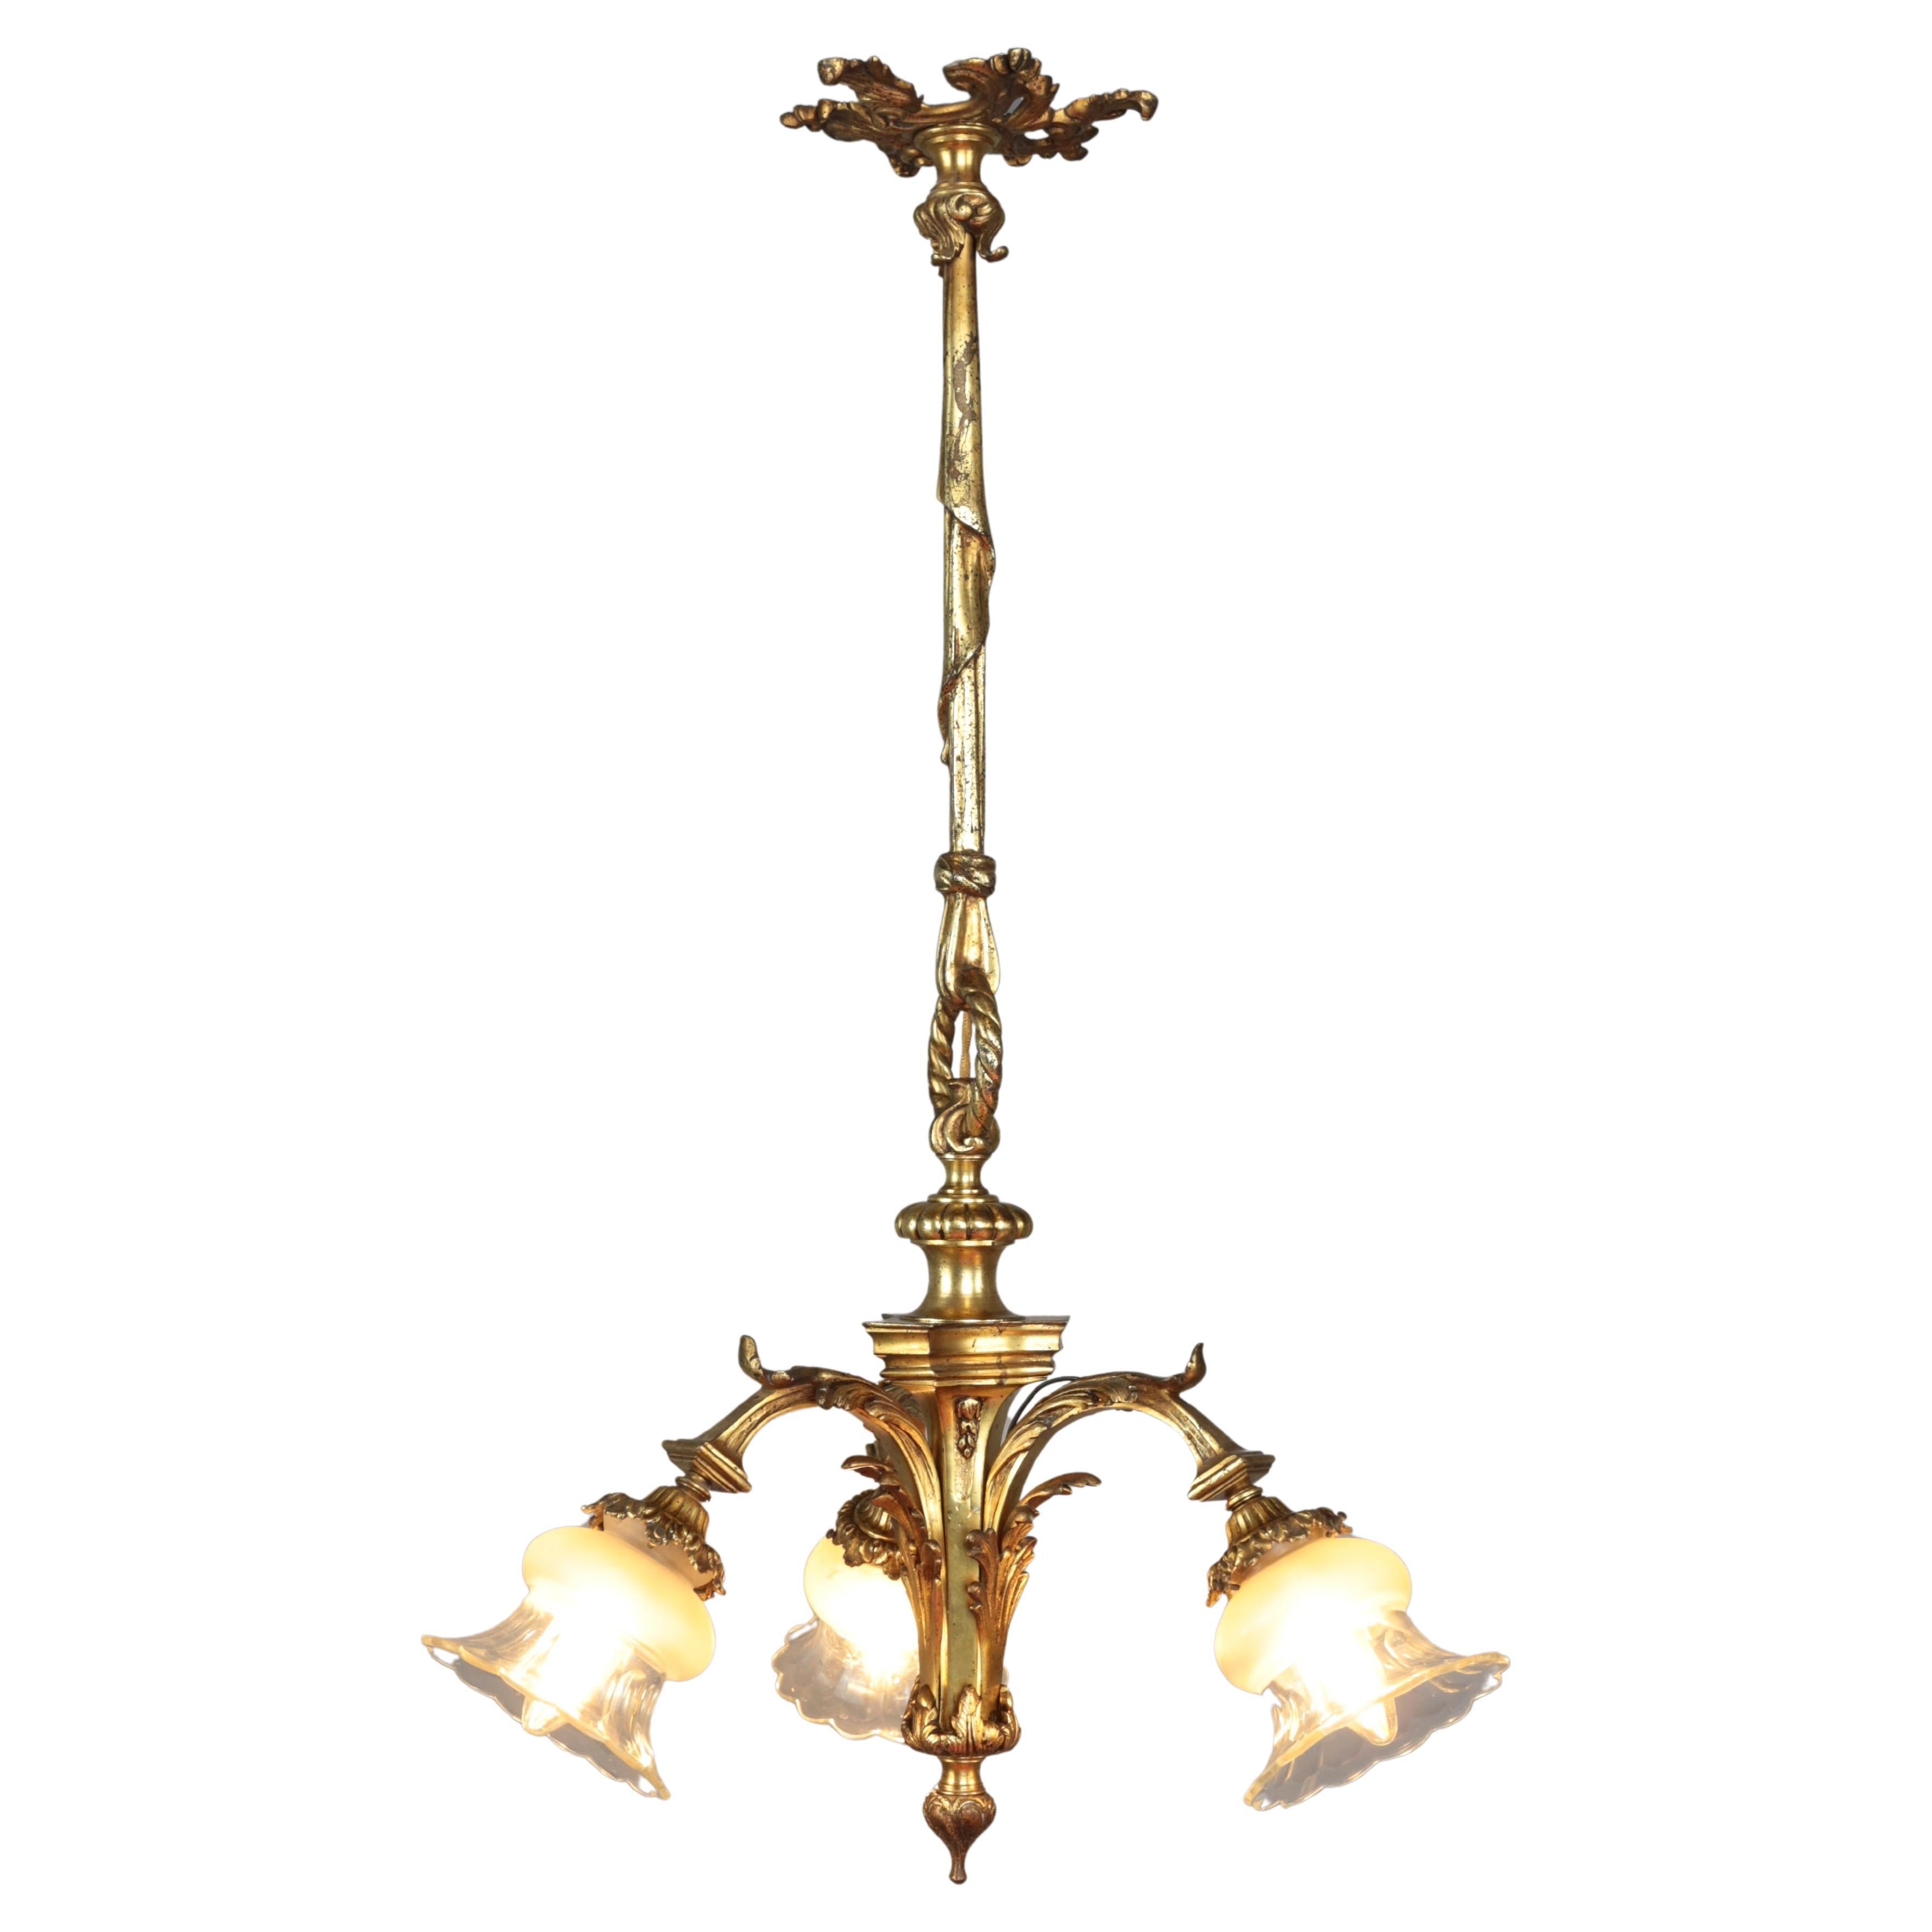 Small antique gilt bronze chandelier